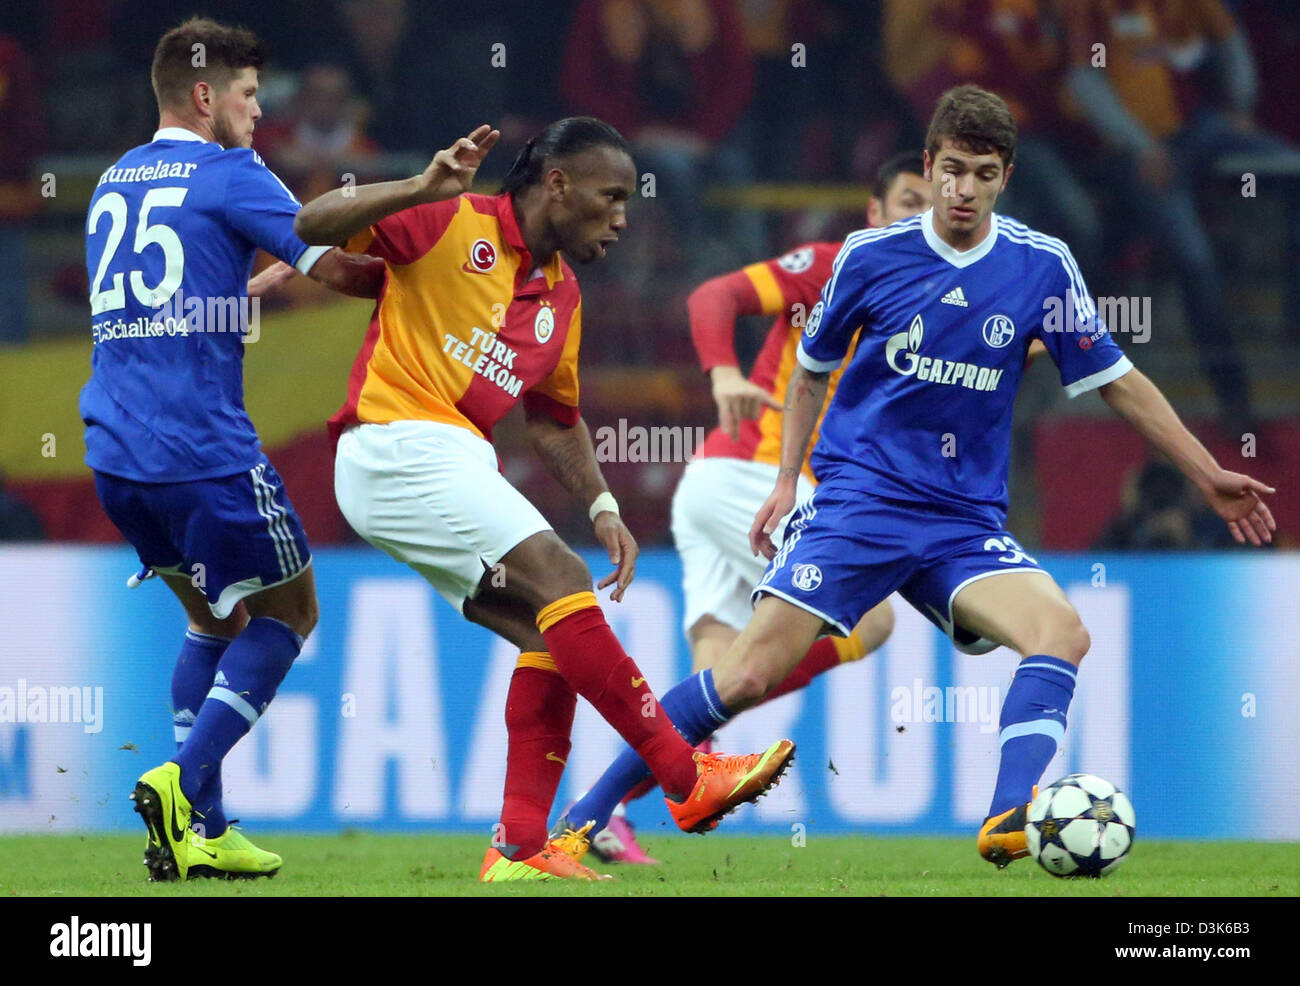 Drogba Influenced My Move To Galatasaray -Zaha - Complete Sports